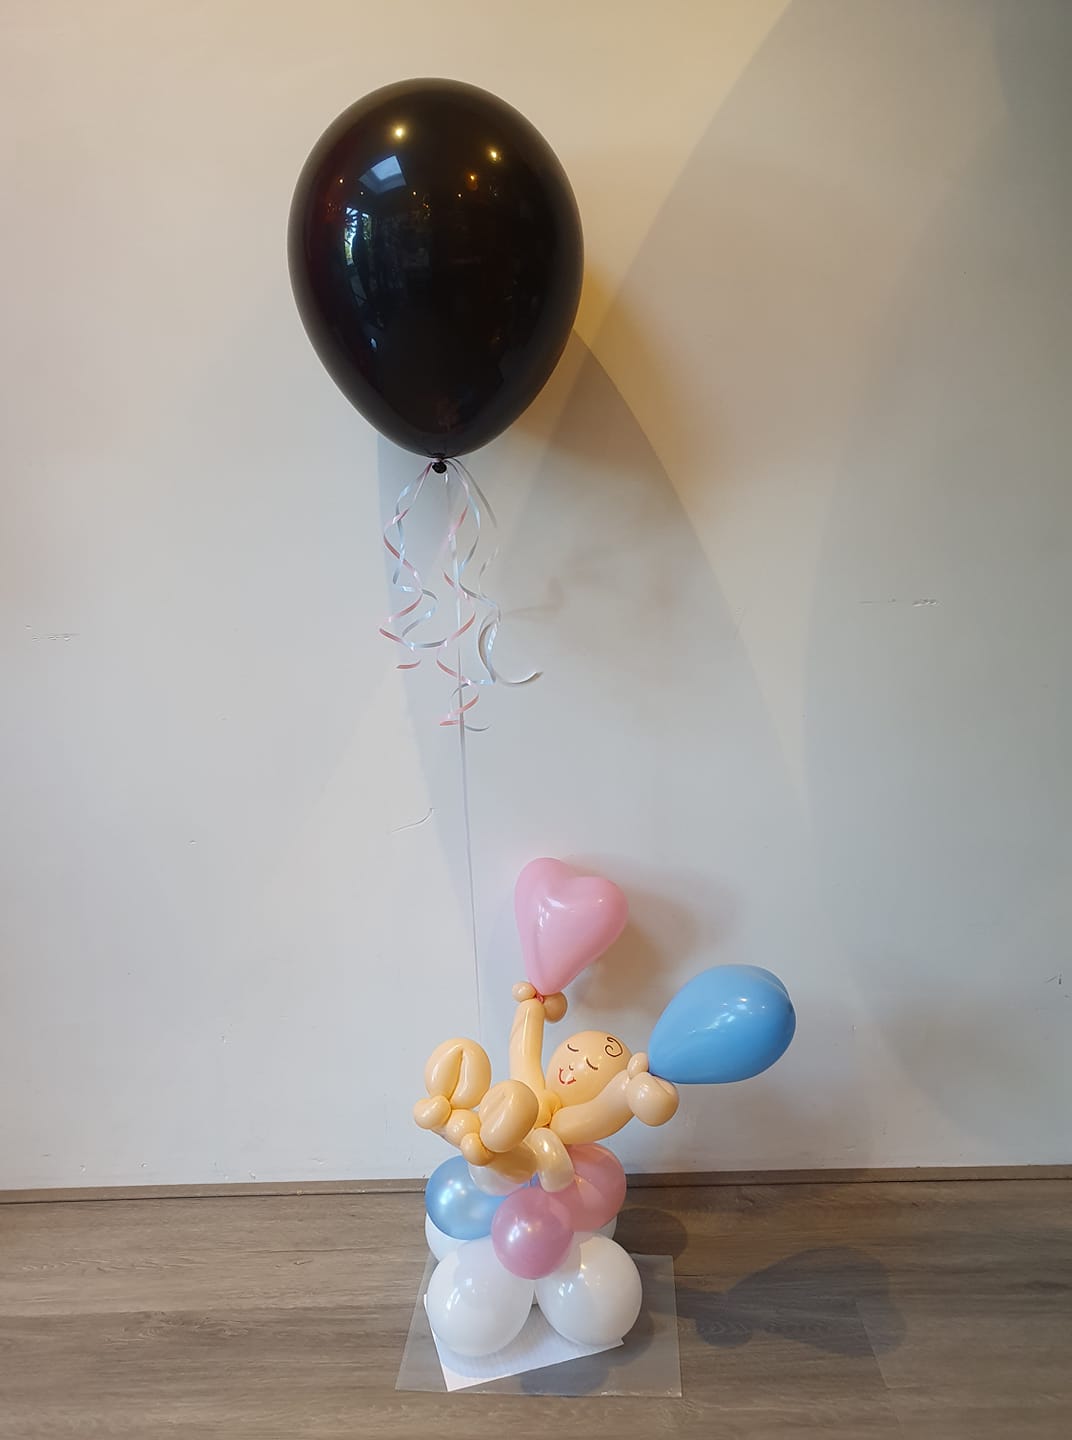 kleien ballon geslacht bekend maken gender reveal ballon meisje jongen baby tafel ballondecoratie - Gender Reveal Party ballondecoraties